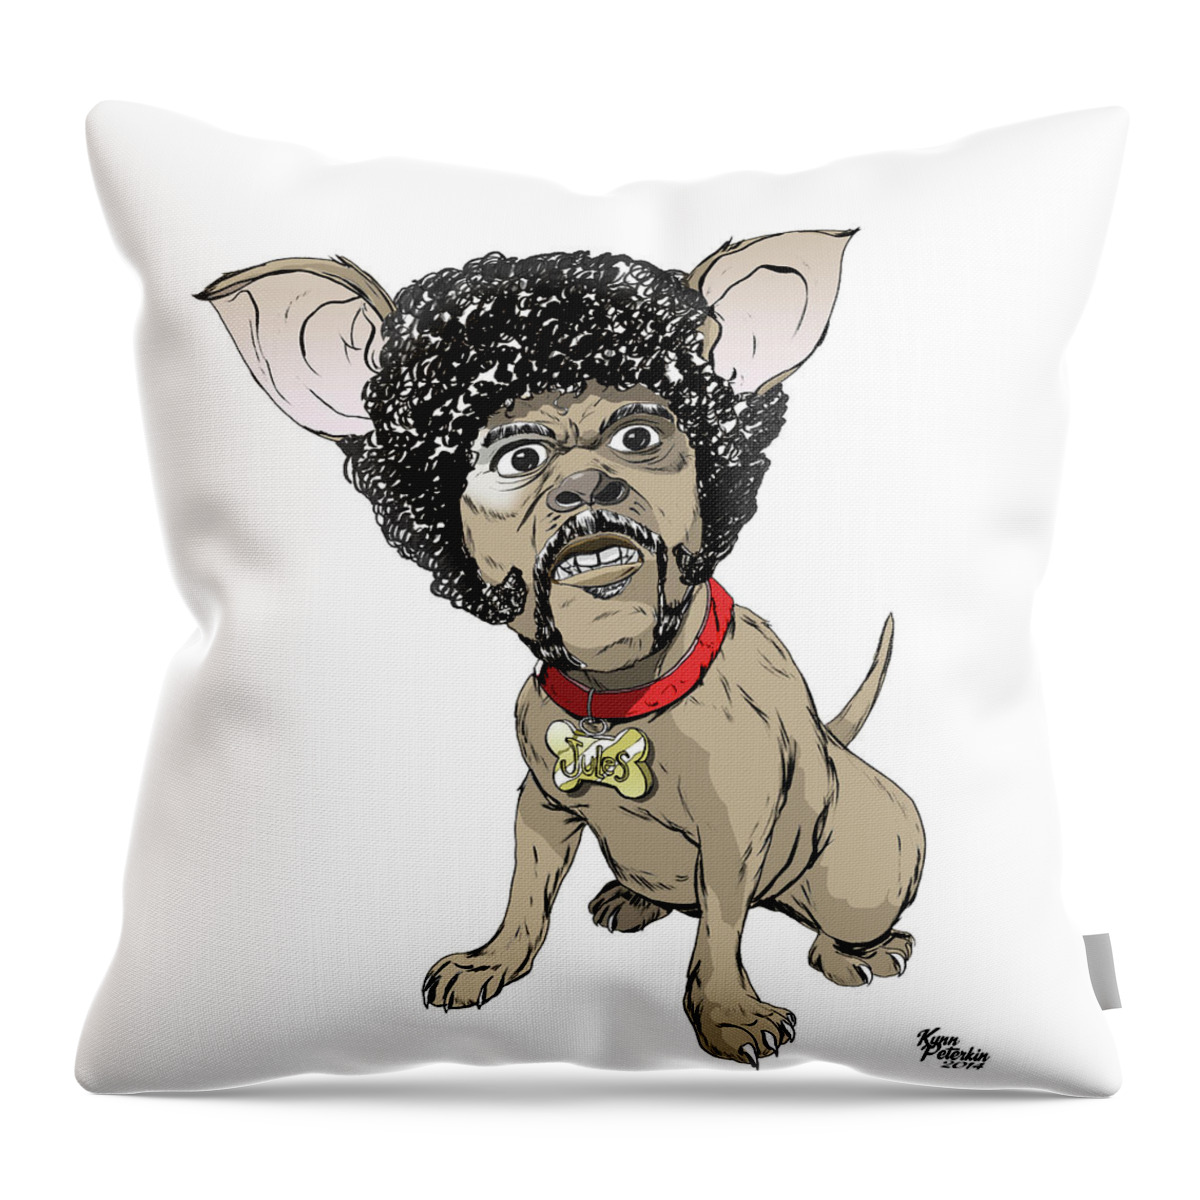 Chihuahua Throw Pillow featuring the digital art Jules by Kynn Peterkin